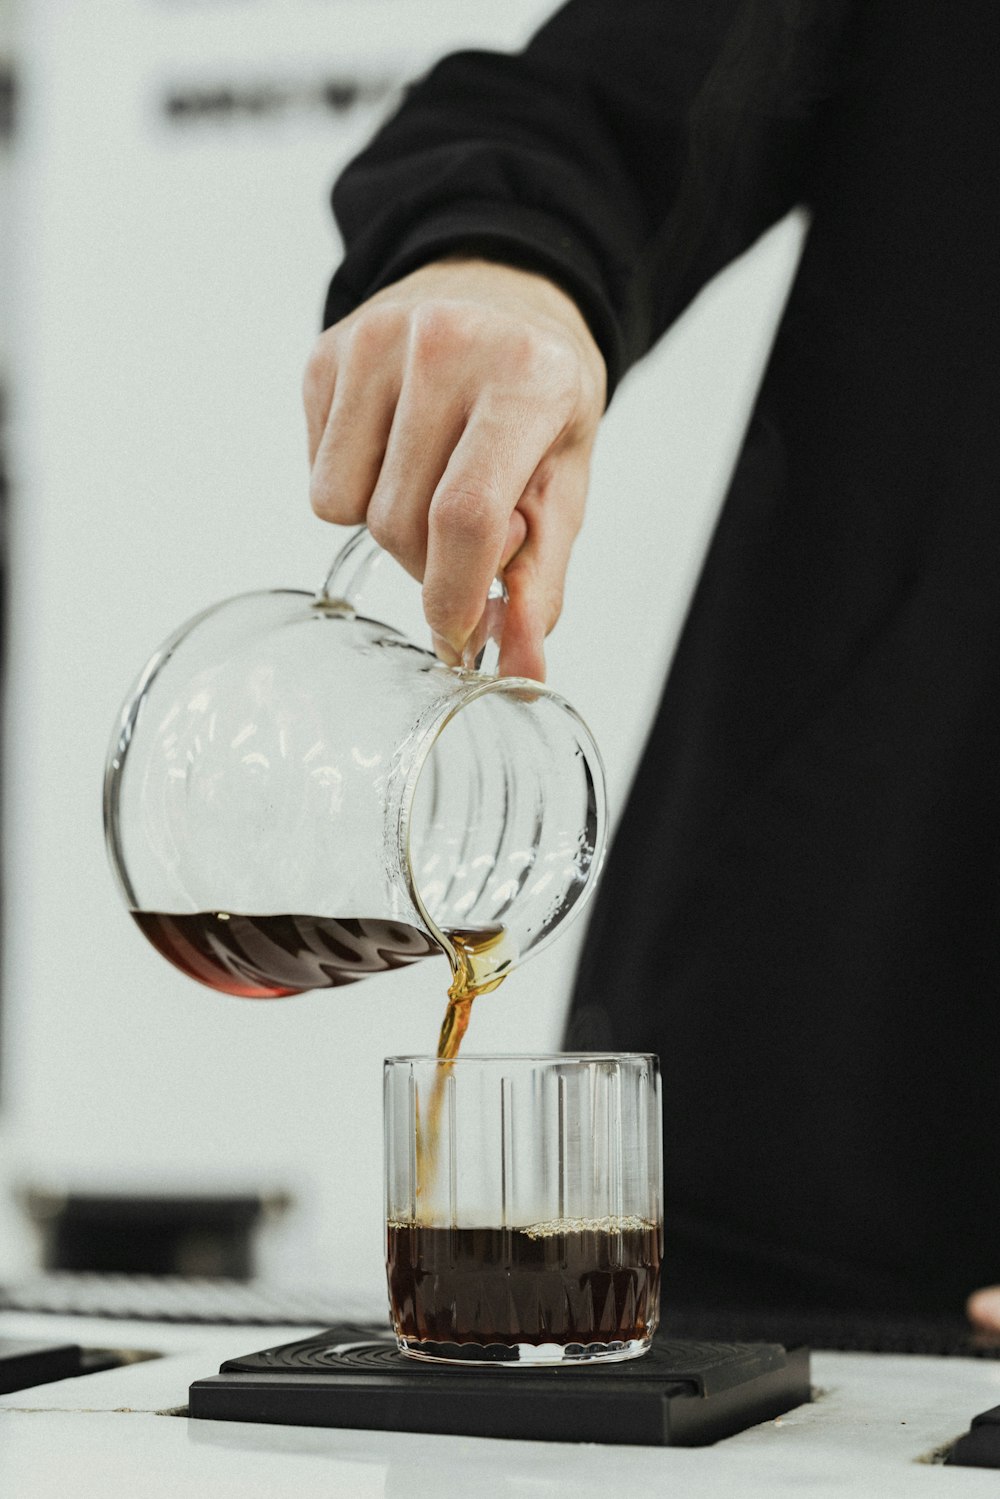 a person pouring coffee into a glass mug